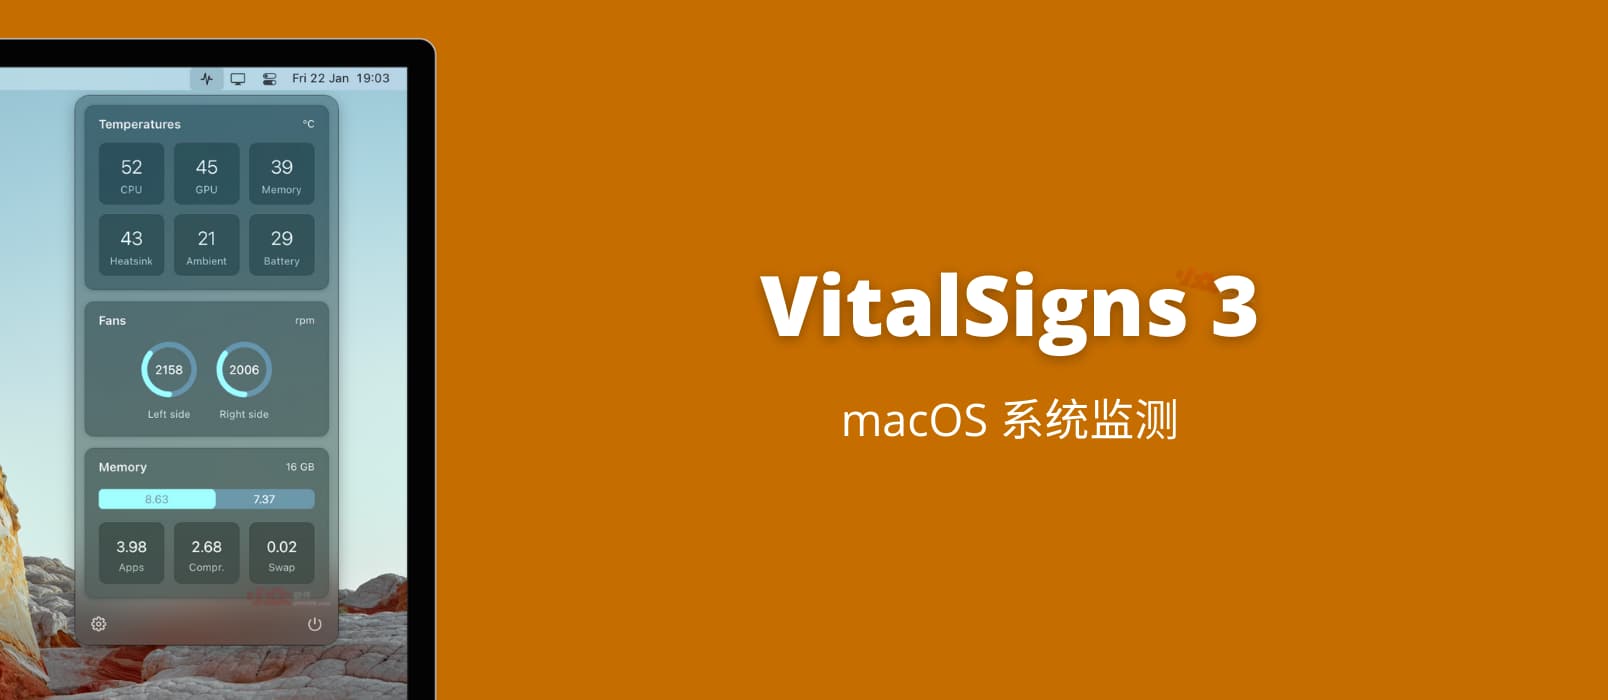 VitalSigns 3 - 免费的 macOS 系统监测工具，包括 10+ 种传感器数据